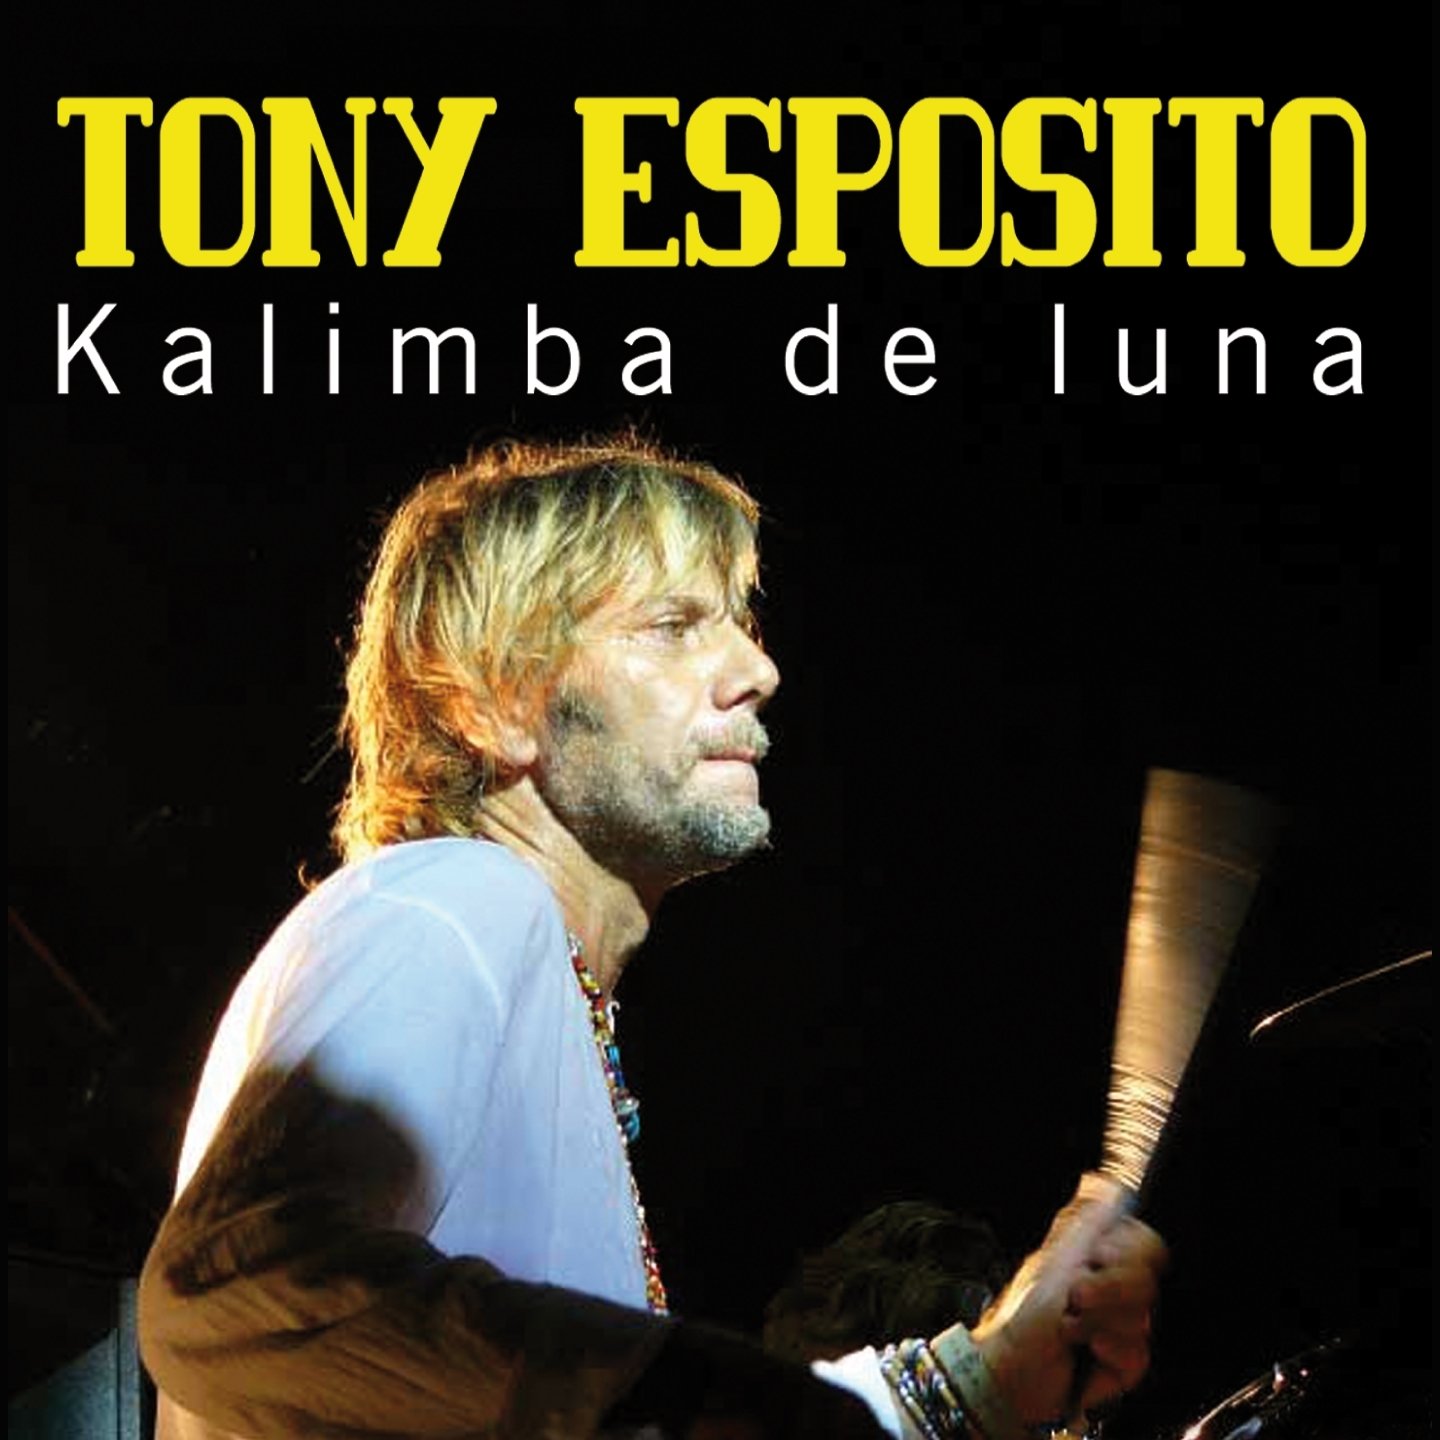 Kalimba de luna — Tony Esposito | Last.fm